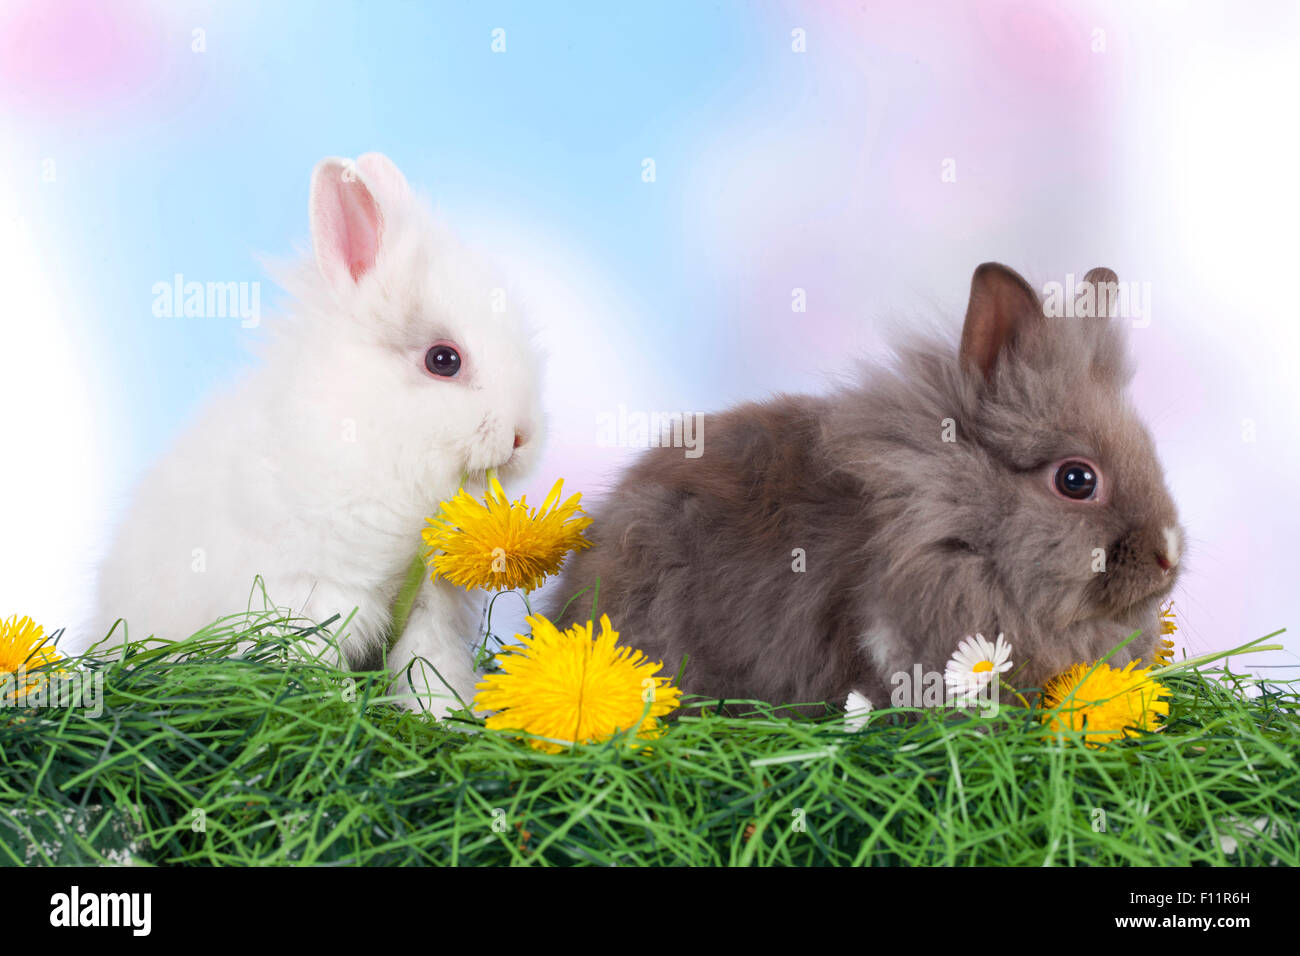 Dwarf Rabbit, Lionhead Rabbit Two individuals grass Dandelion flowers Stock Photo